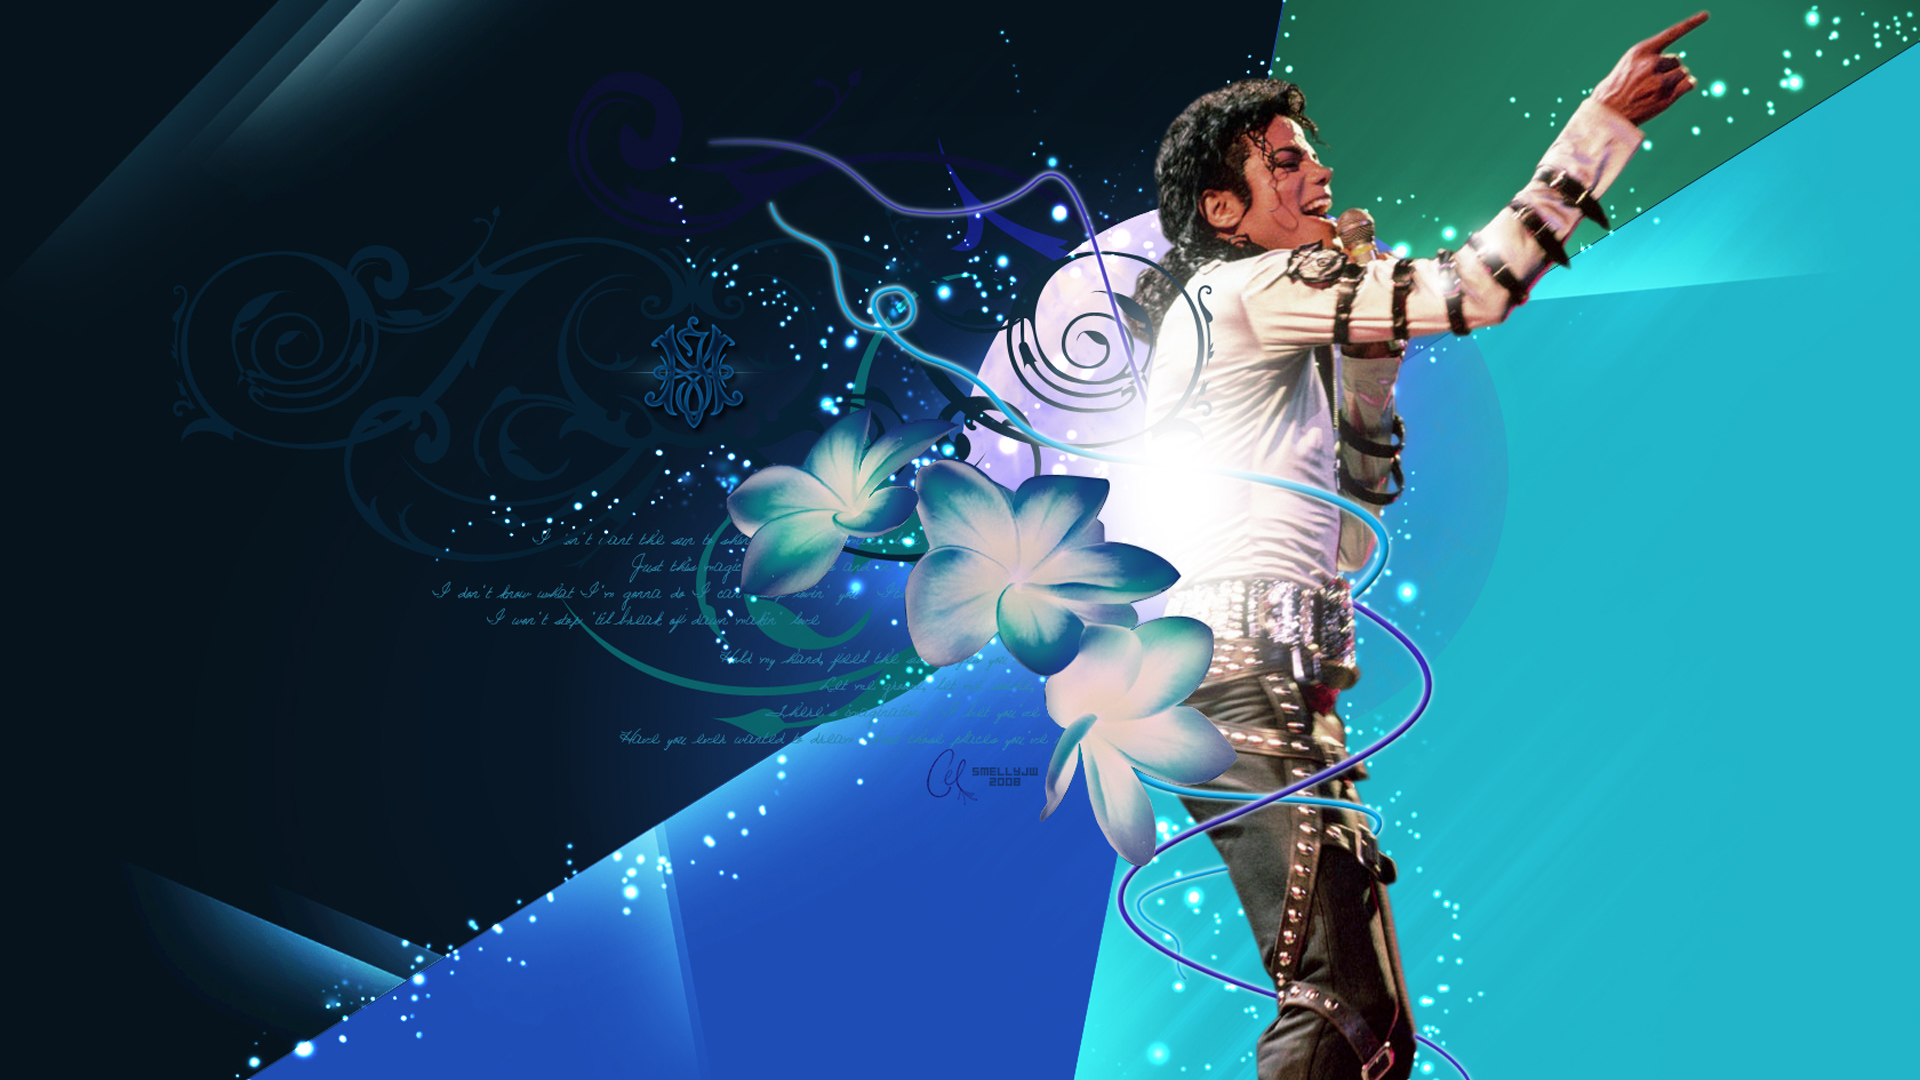 Michael Jackson Wallpaper Memory Image Image